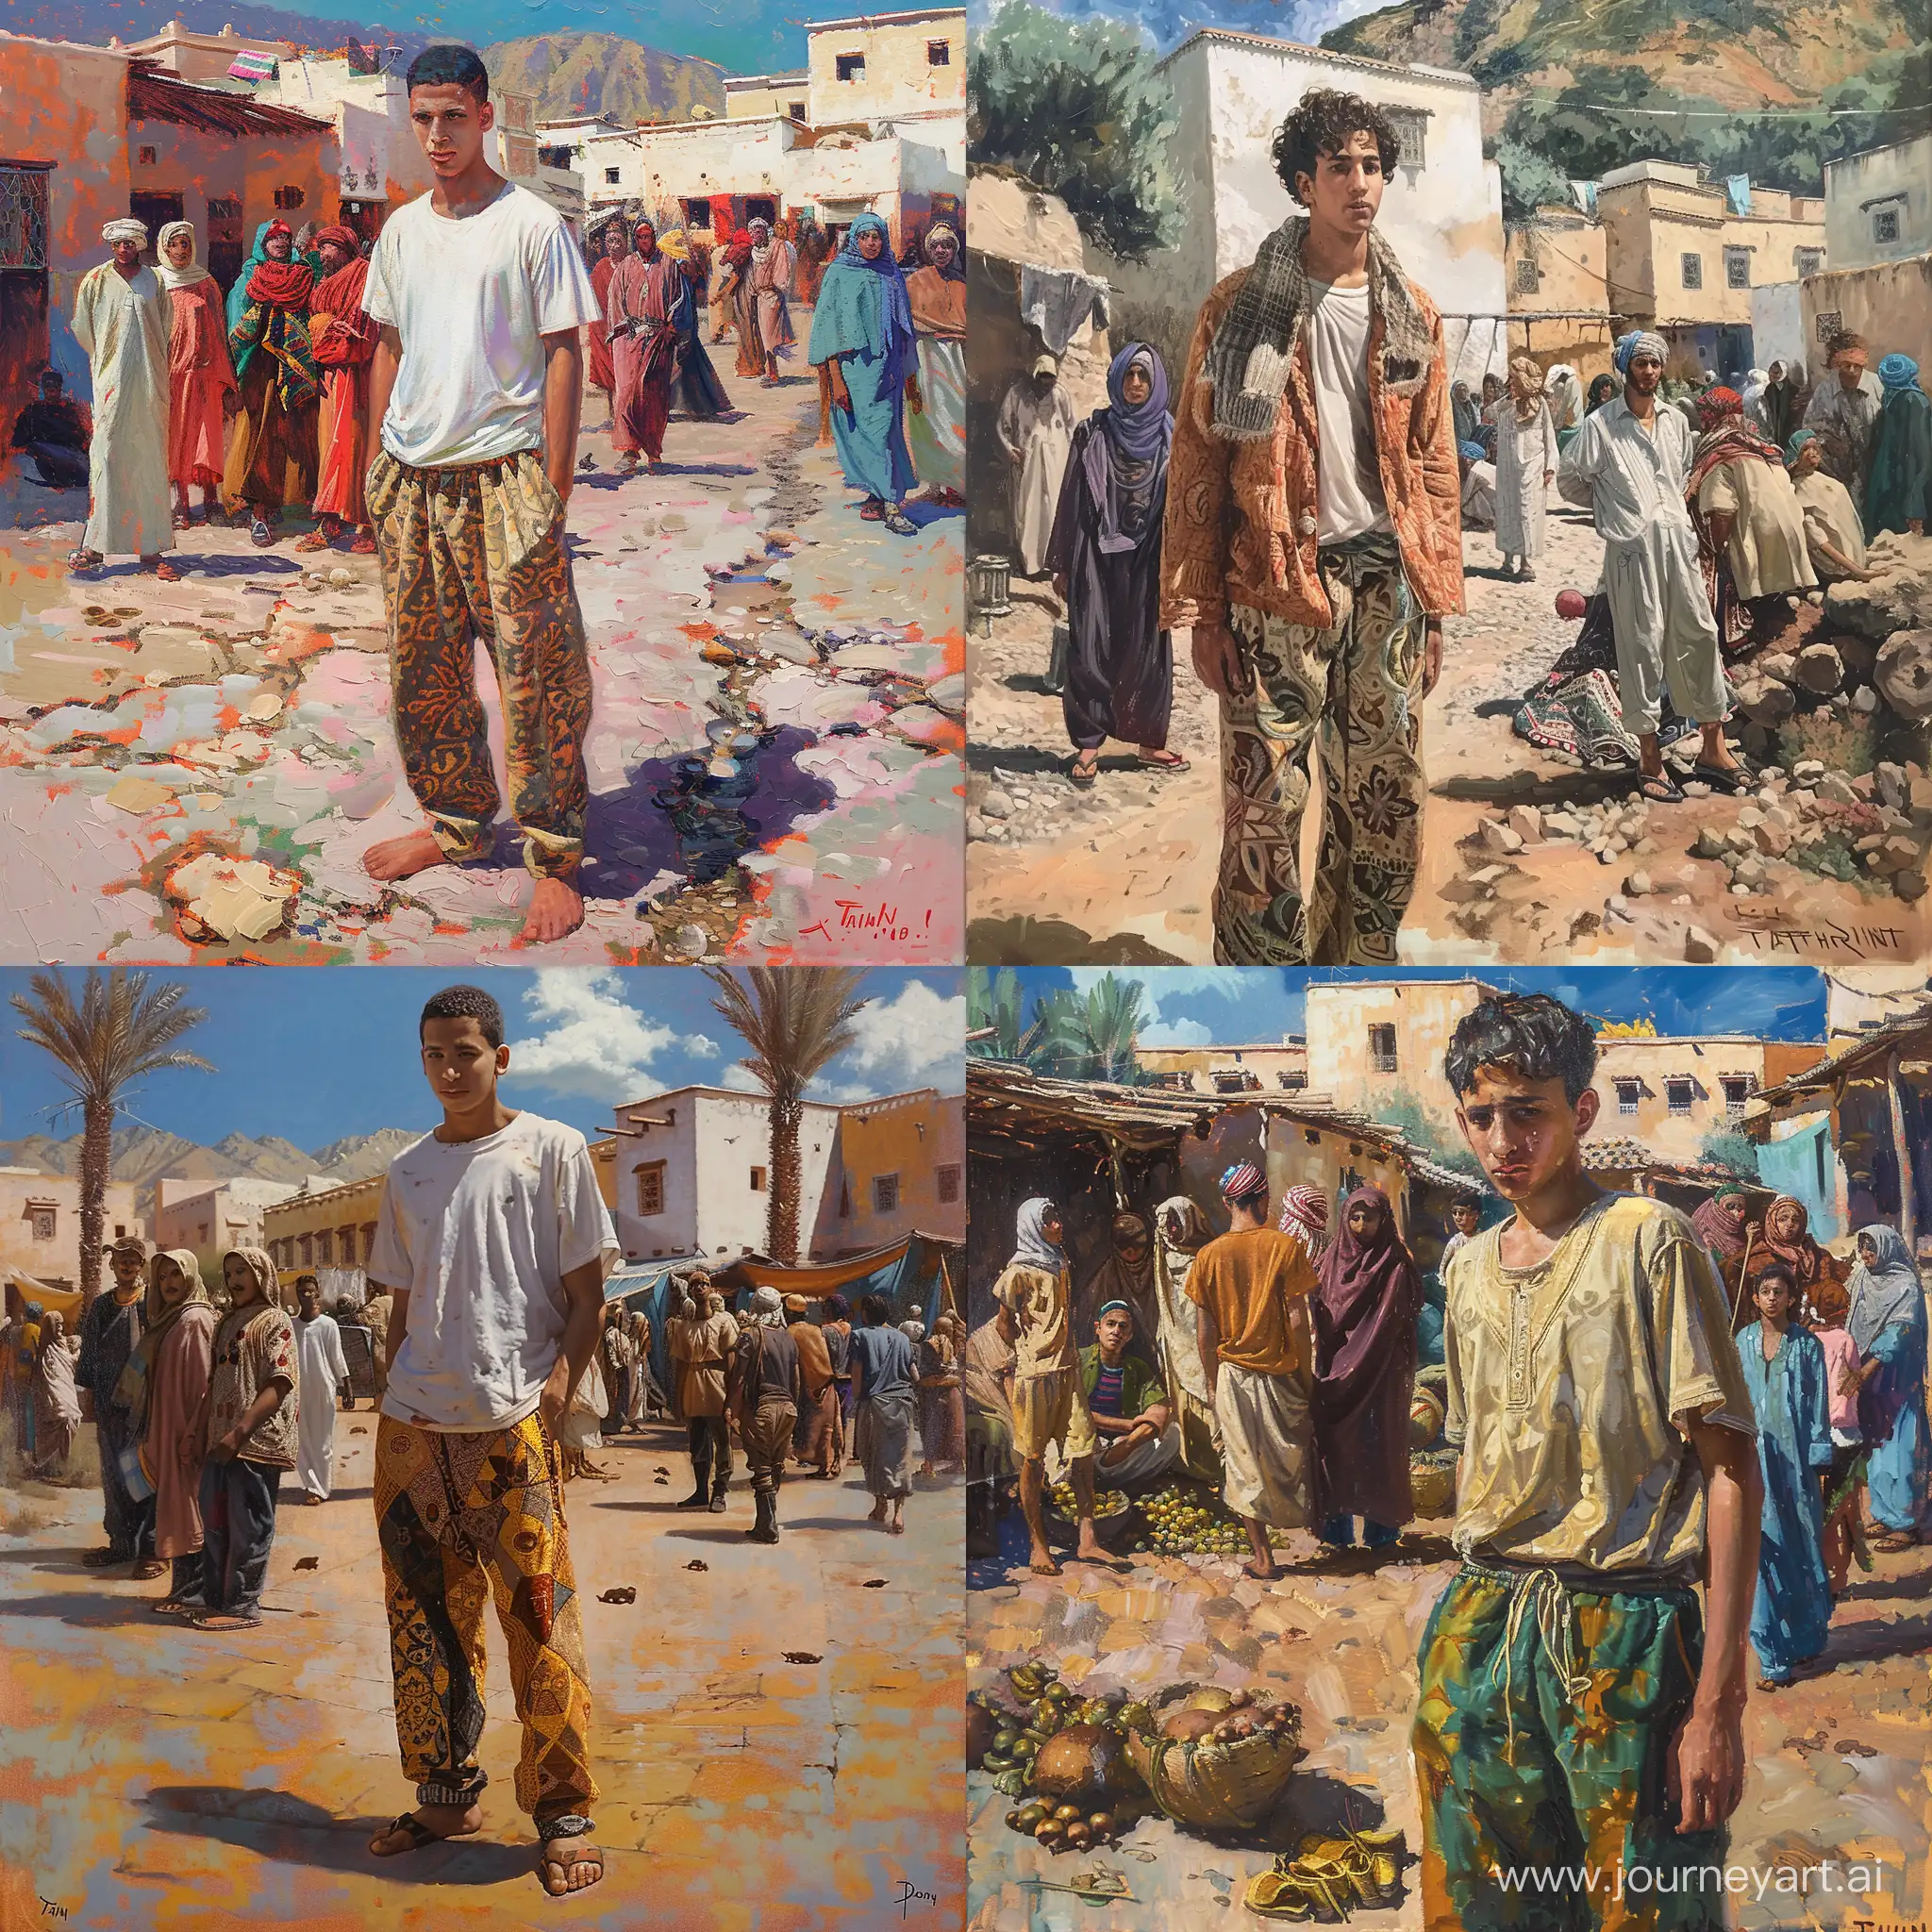 Modern-Tajin-Pants-Worn-by-Young-Moroccan-Man-in-Traditional-Village-Setting